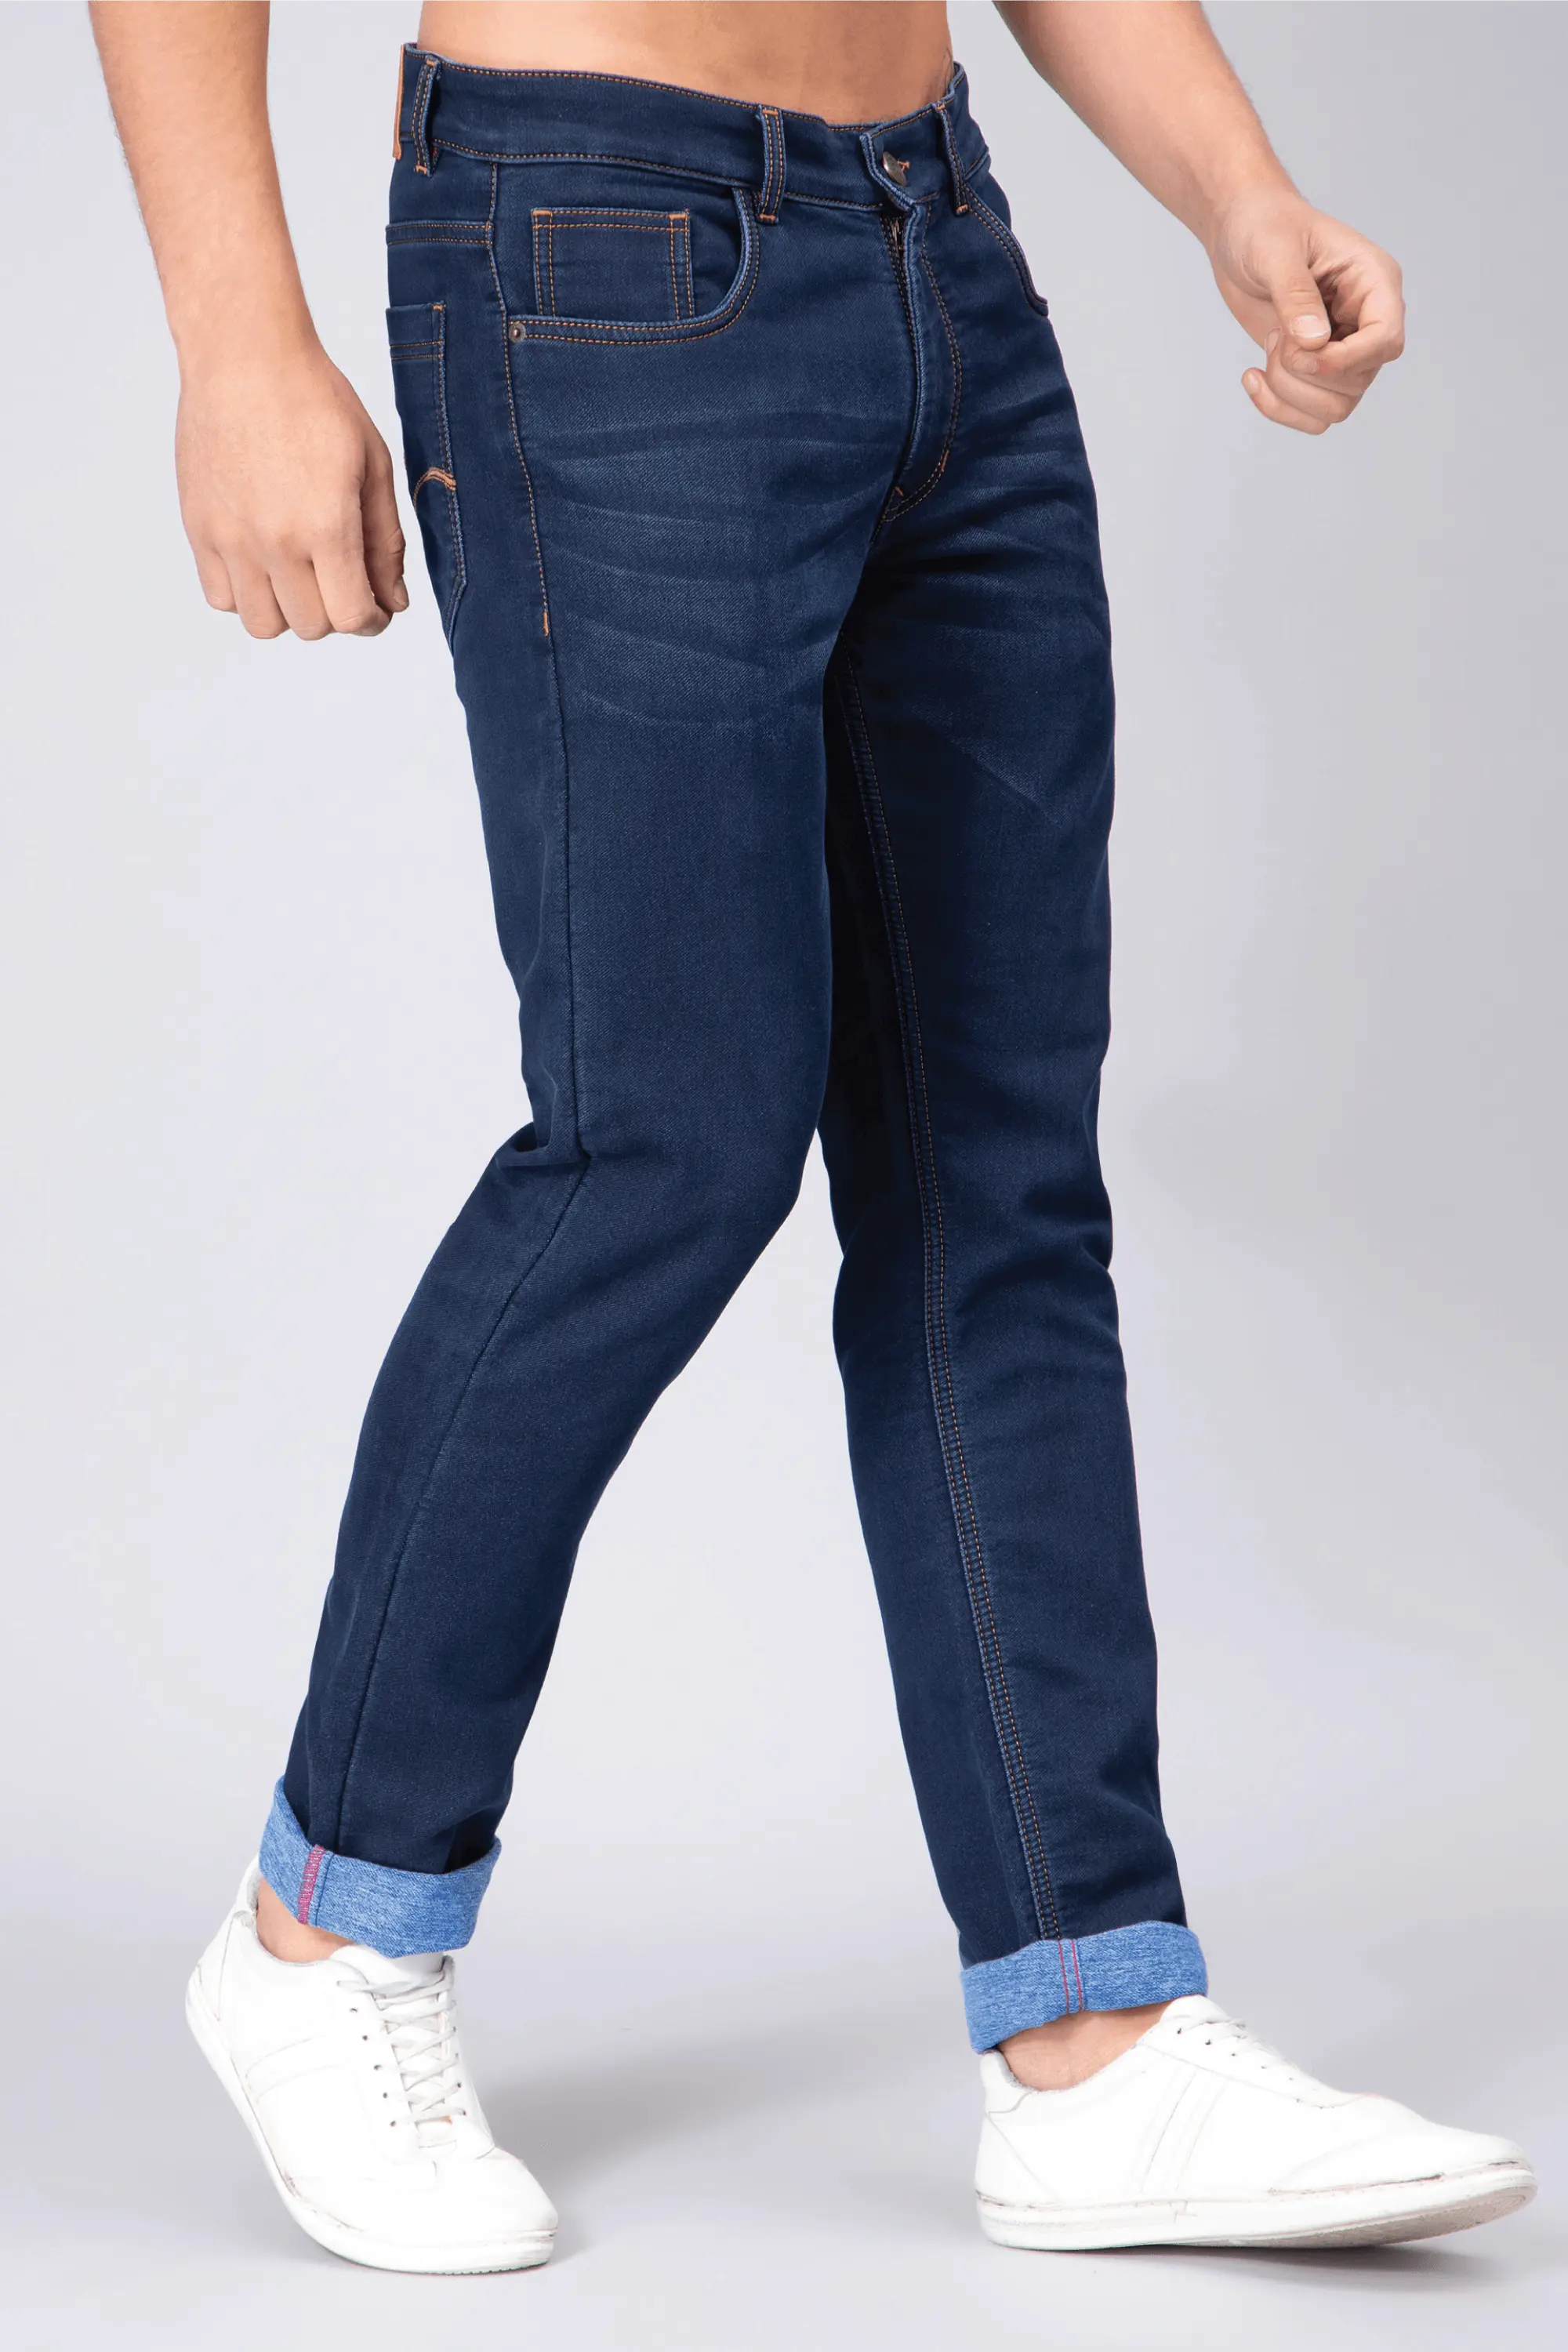 Buy BLUE BUDDHA Men's Dark Blue Denim Slim Fit Jeans-230110044 at Amazon.in